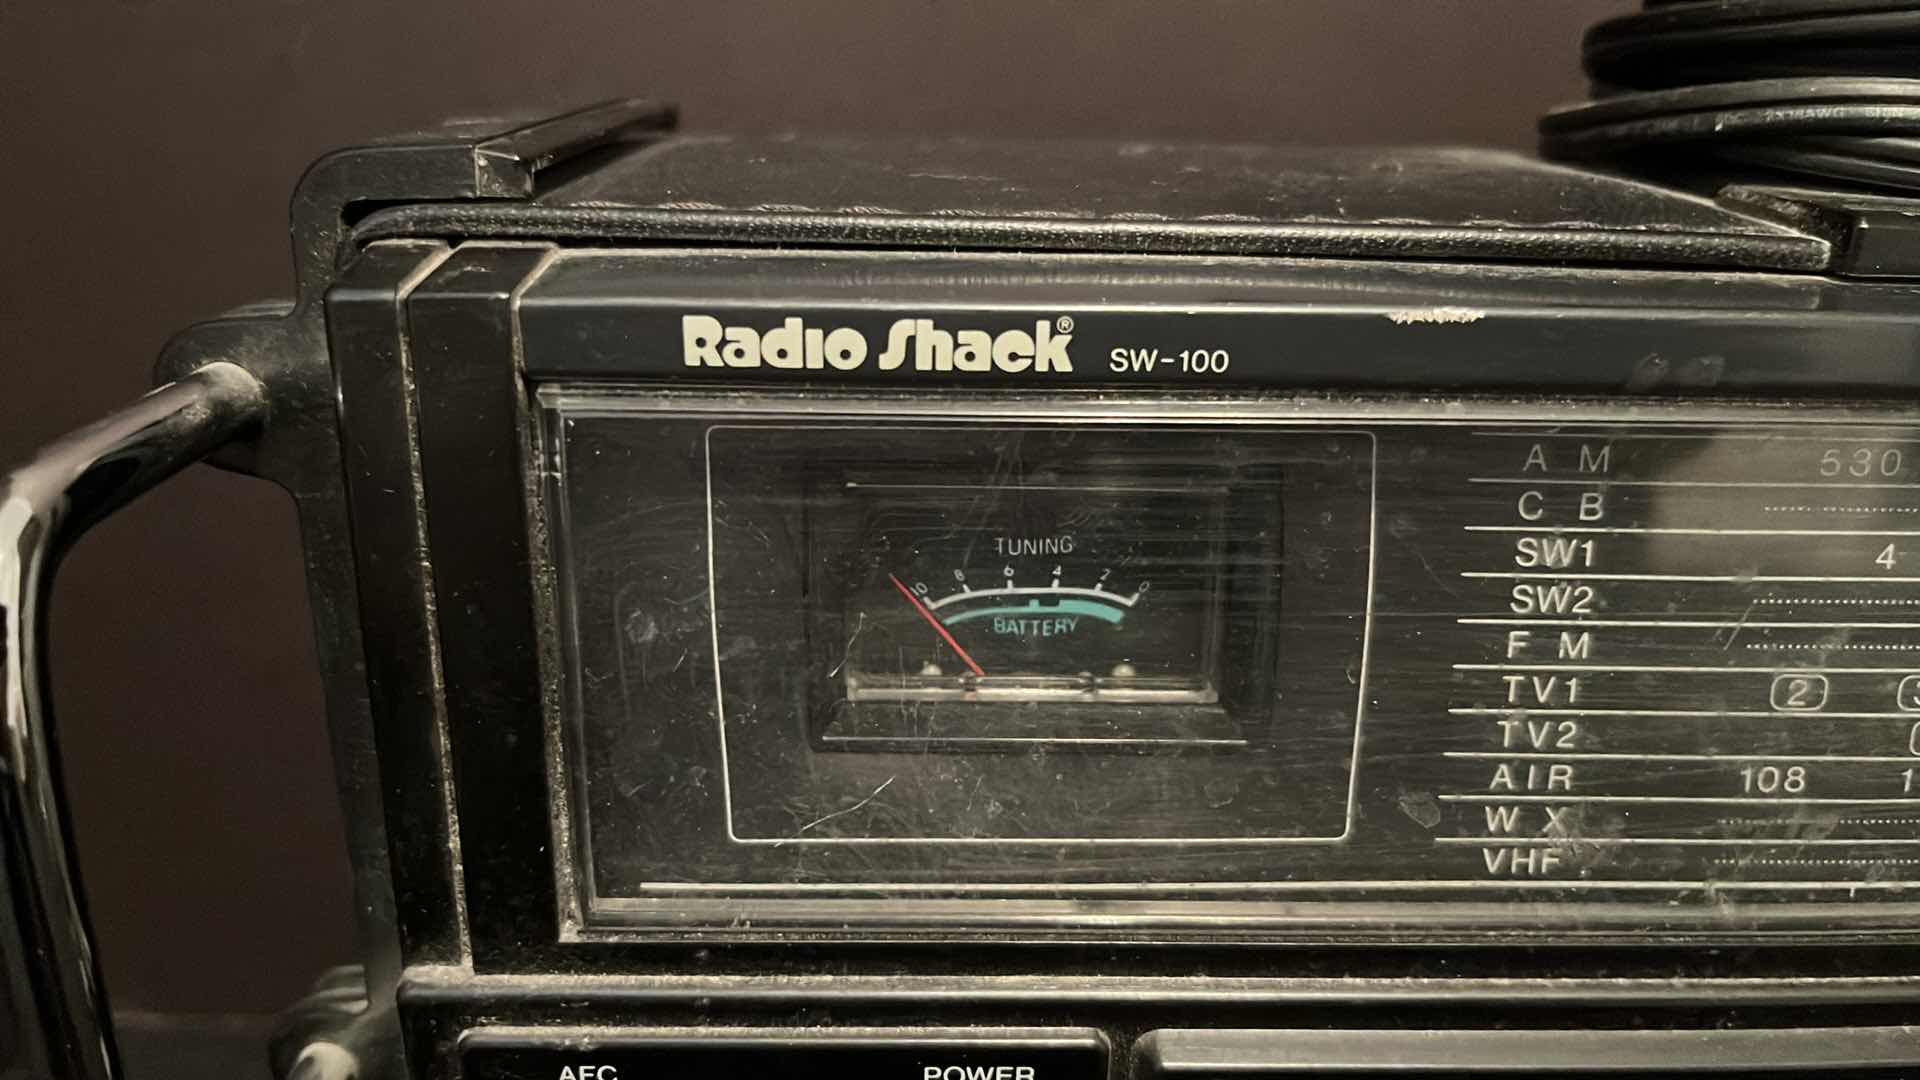 Photo 6 of VINTAGE RADIO SHACK SW-100 (AM CB SW1 SW2 FM TV1 TV2 AIR WX VHF MULTIBAND RECEIVER) MODEL 12-649